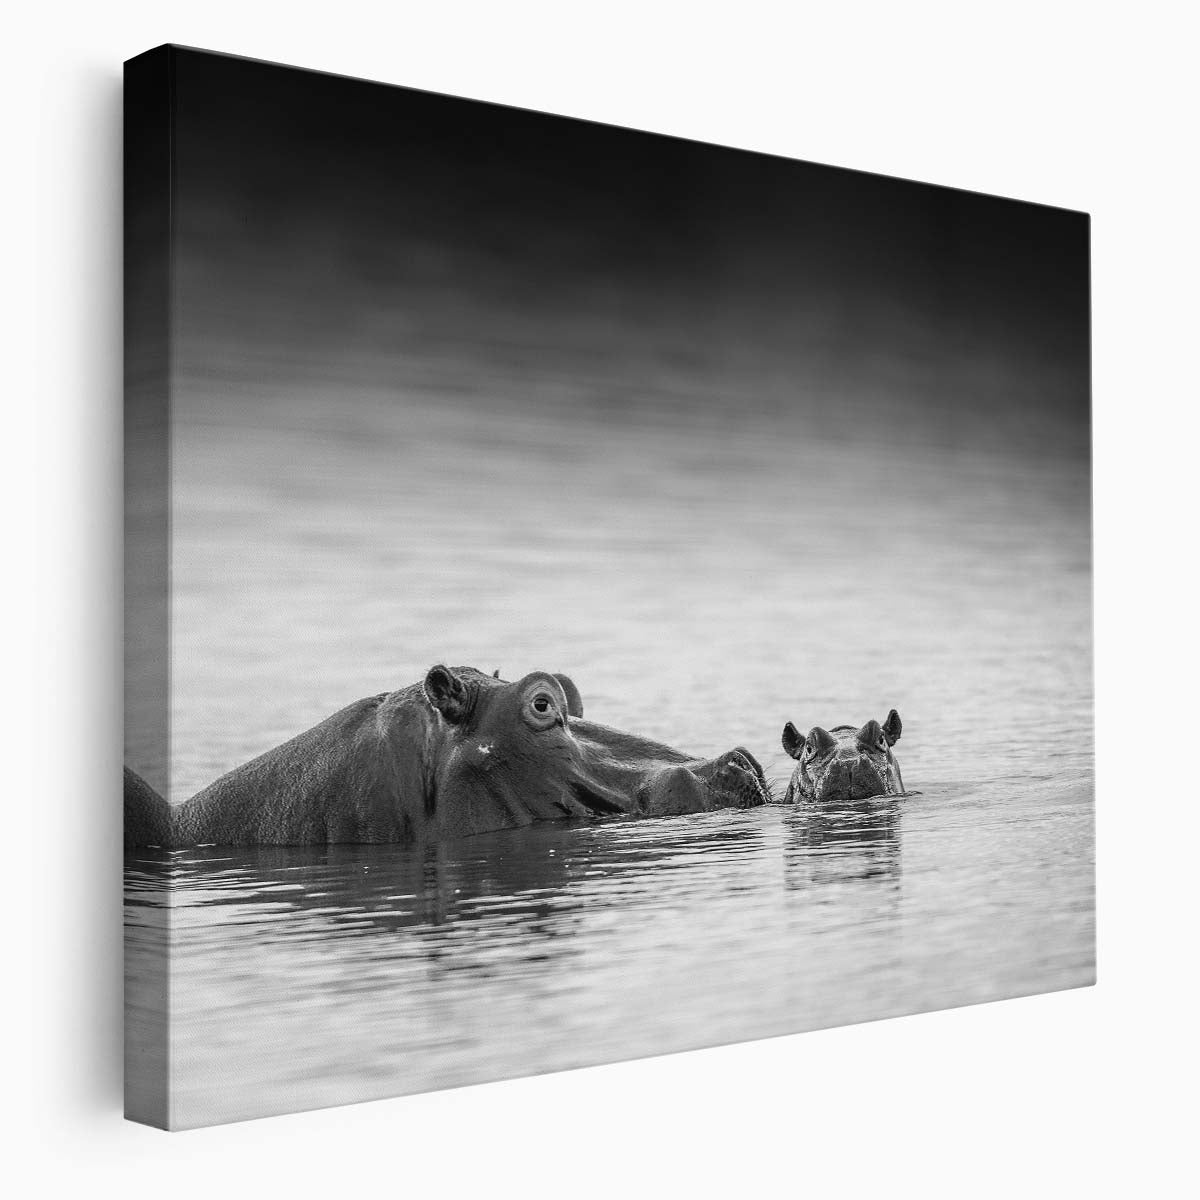 Zimanga Hippo Bathing Monochrome Wildlife Wall Art by Luxuriance Designs. Made in USA.